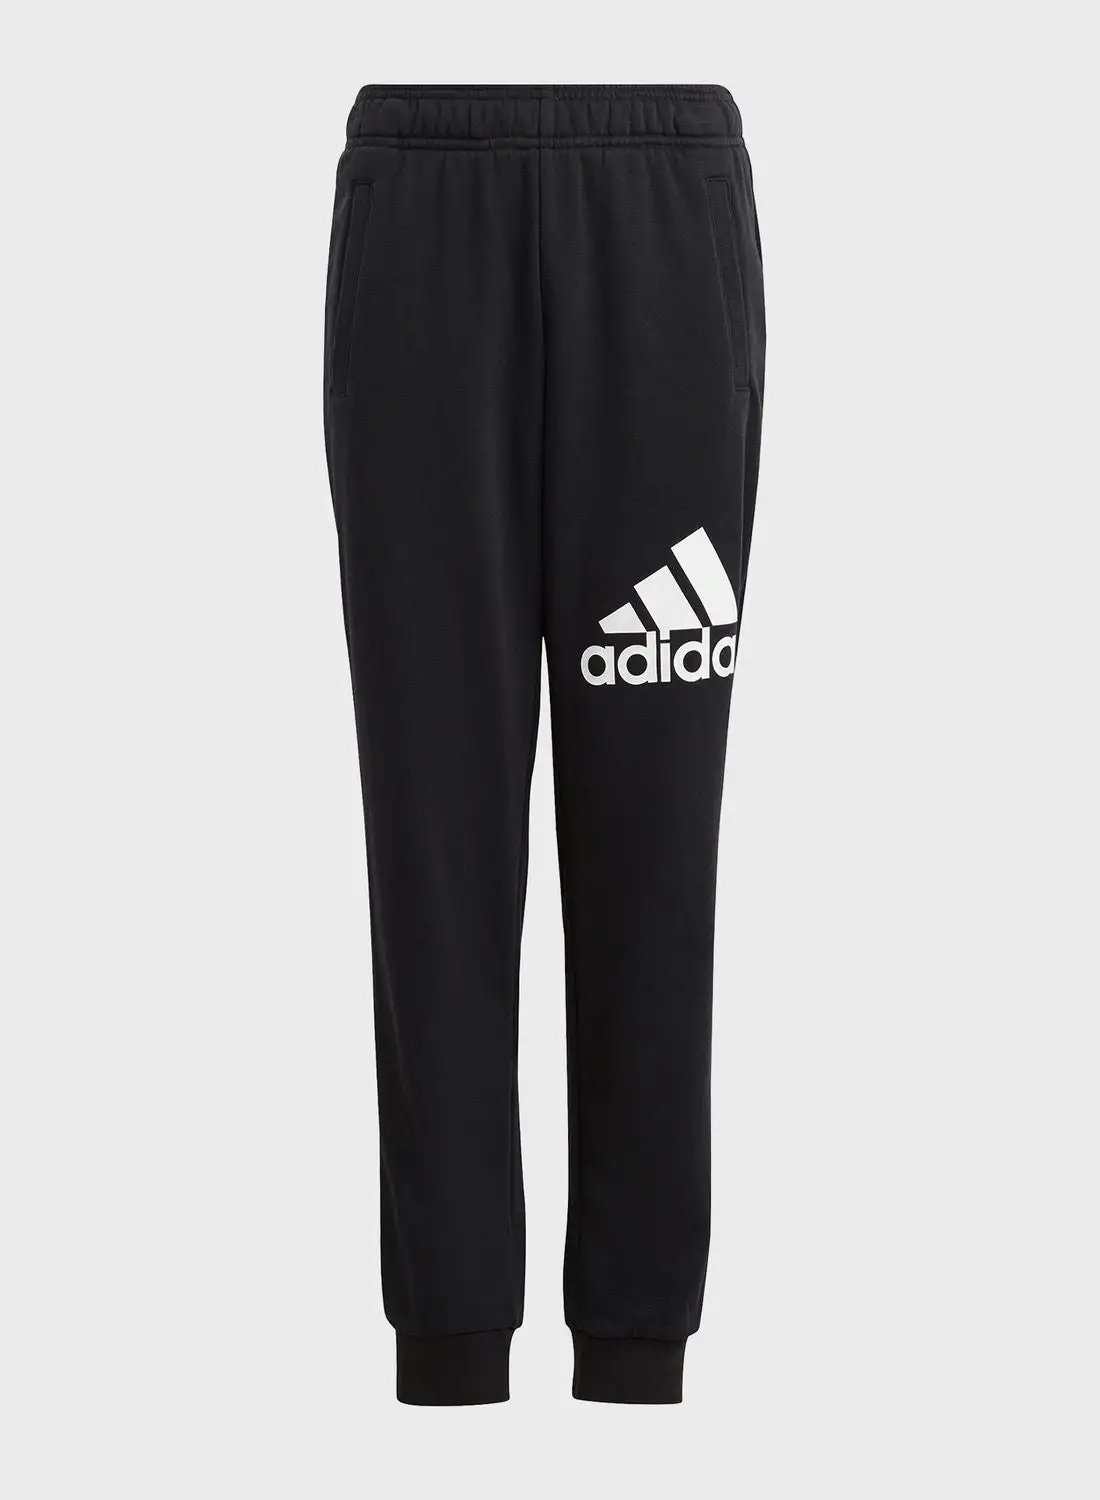 Adidas Brand Love Sweatpants